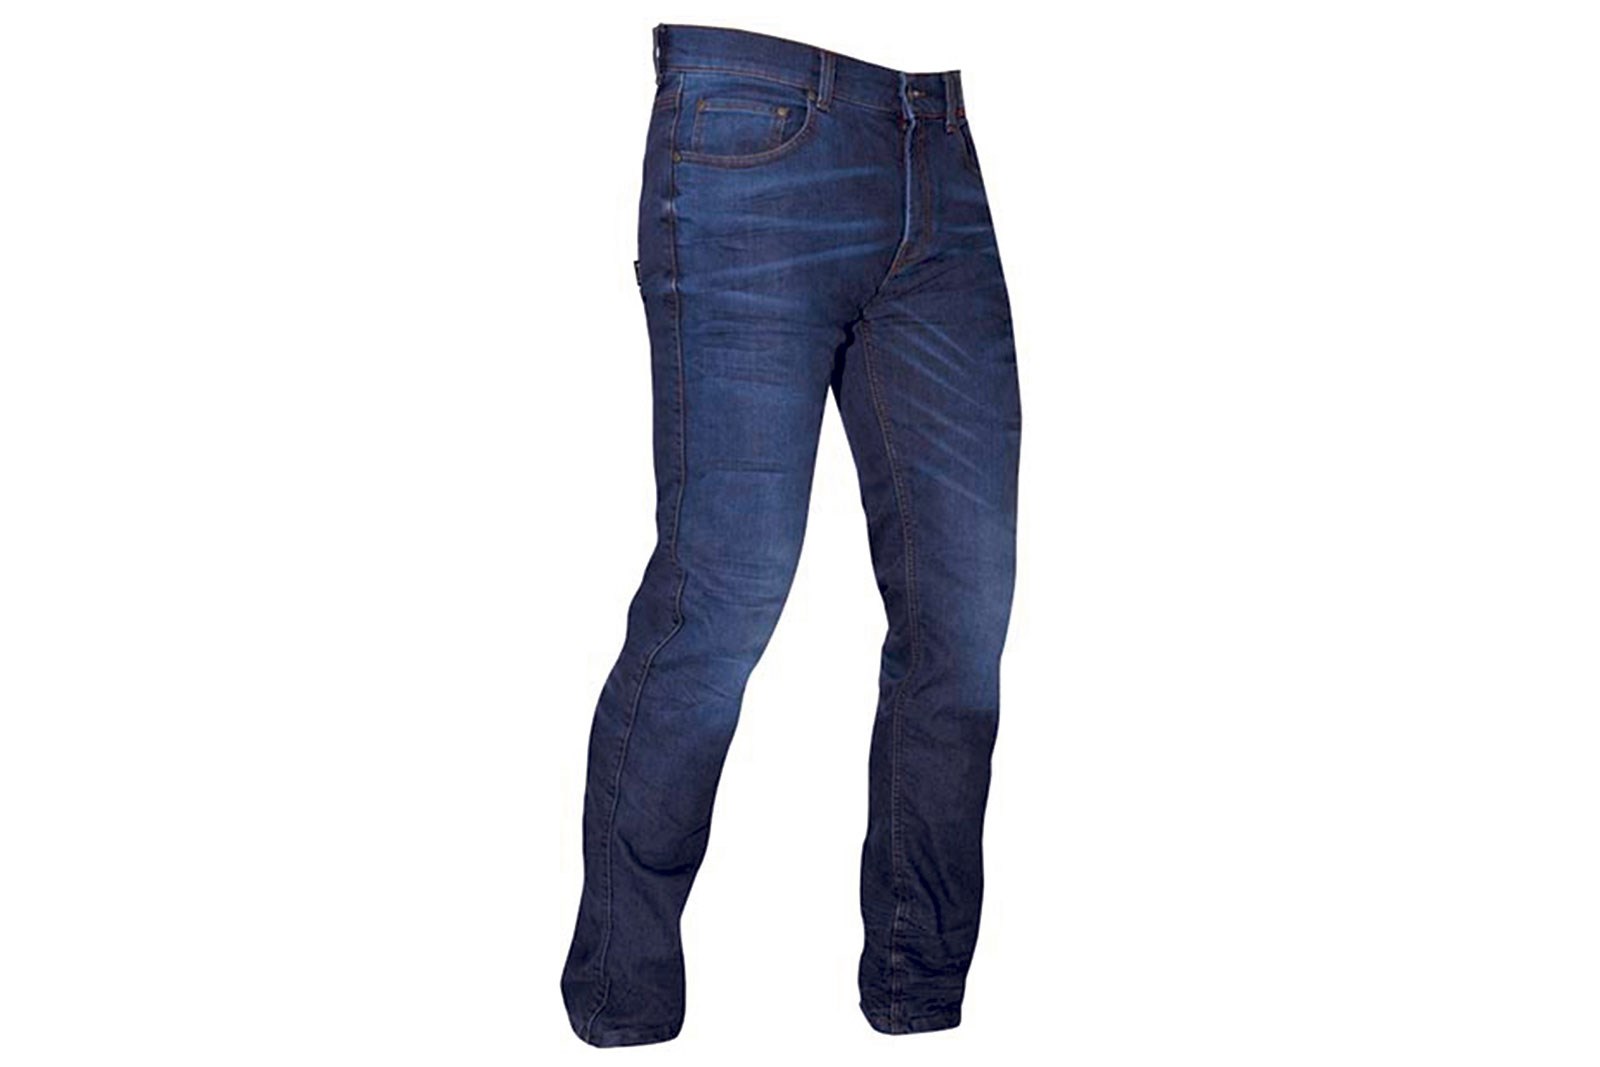 Product review: Richa Original Cordura Jeans